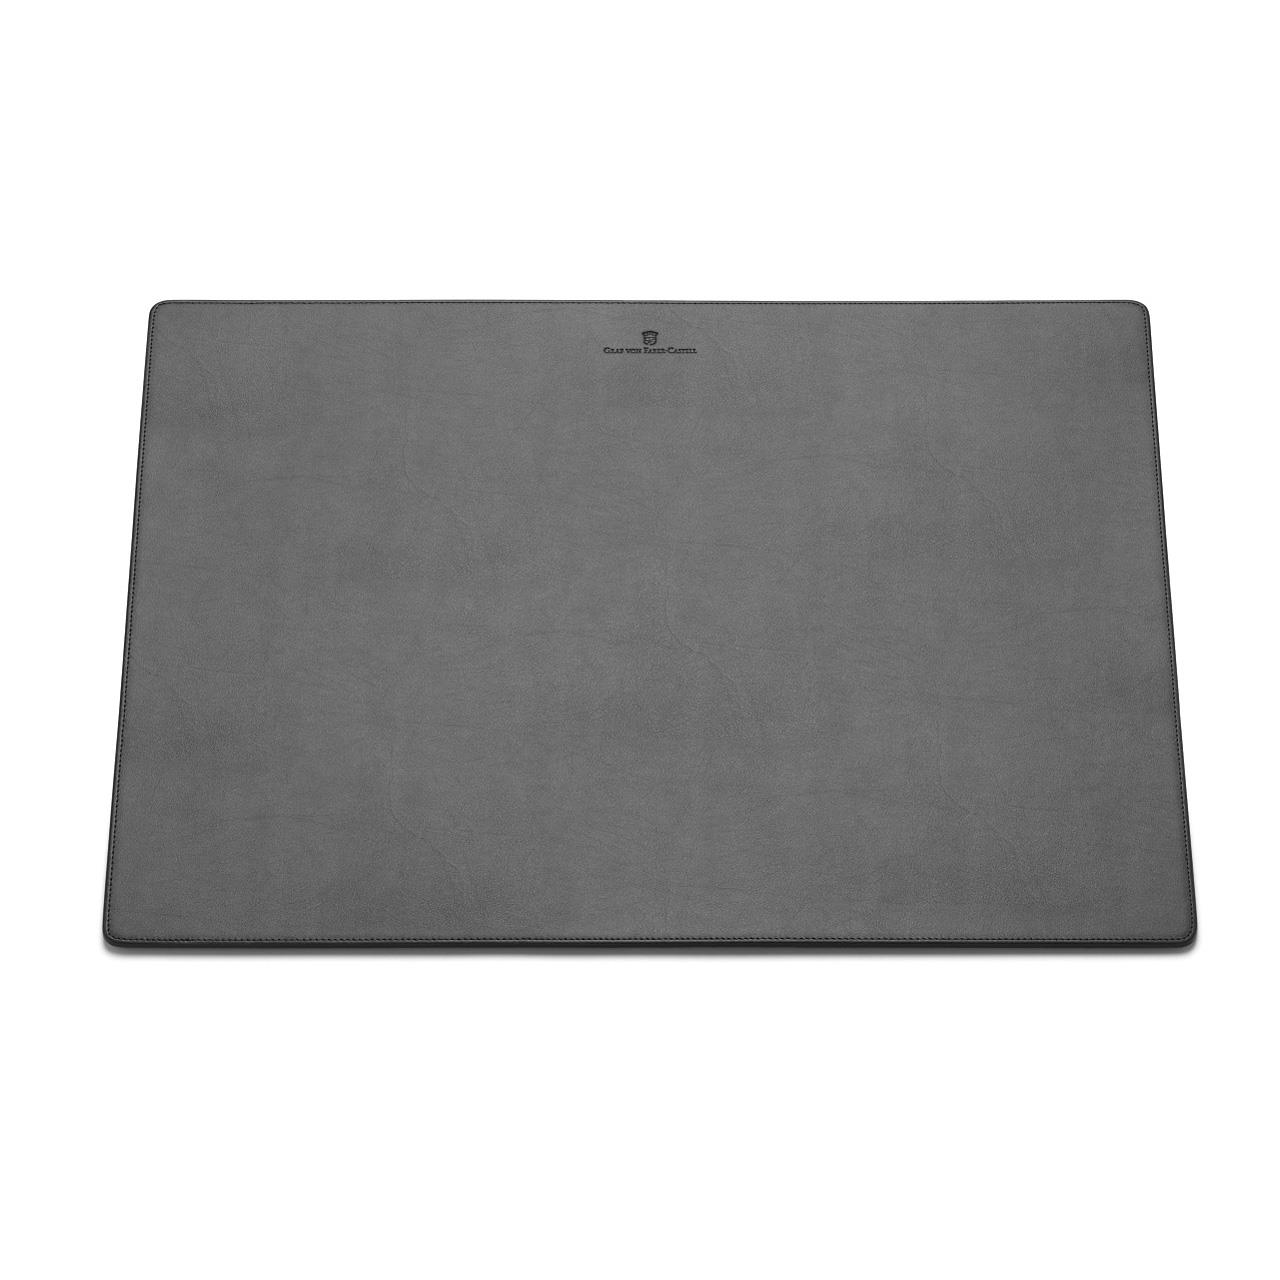 Graf Von Faber Castell Epsom Desk Pad Plain 55x45 Cm Black